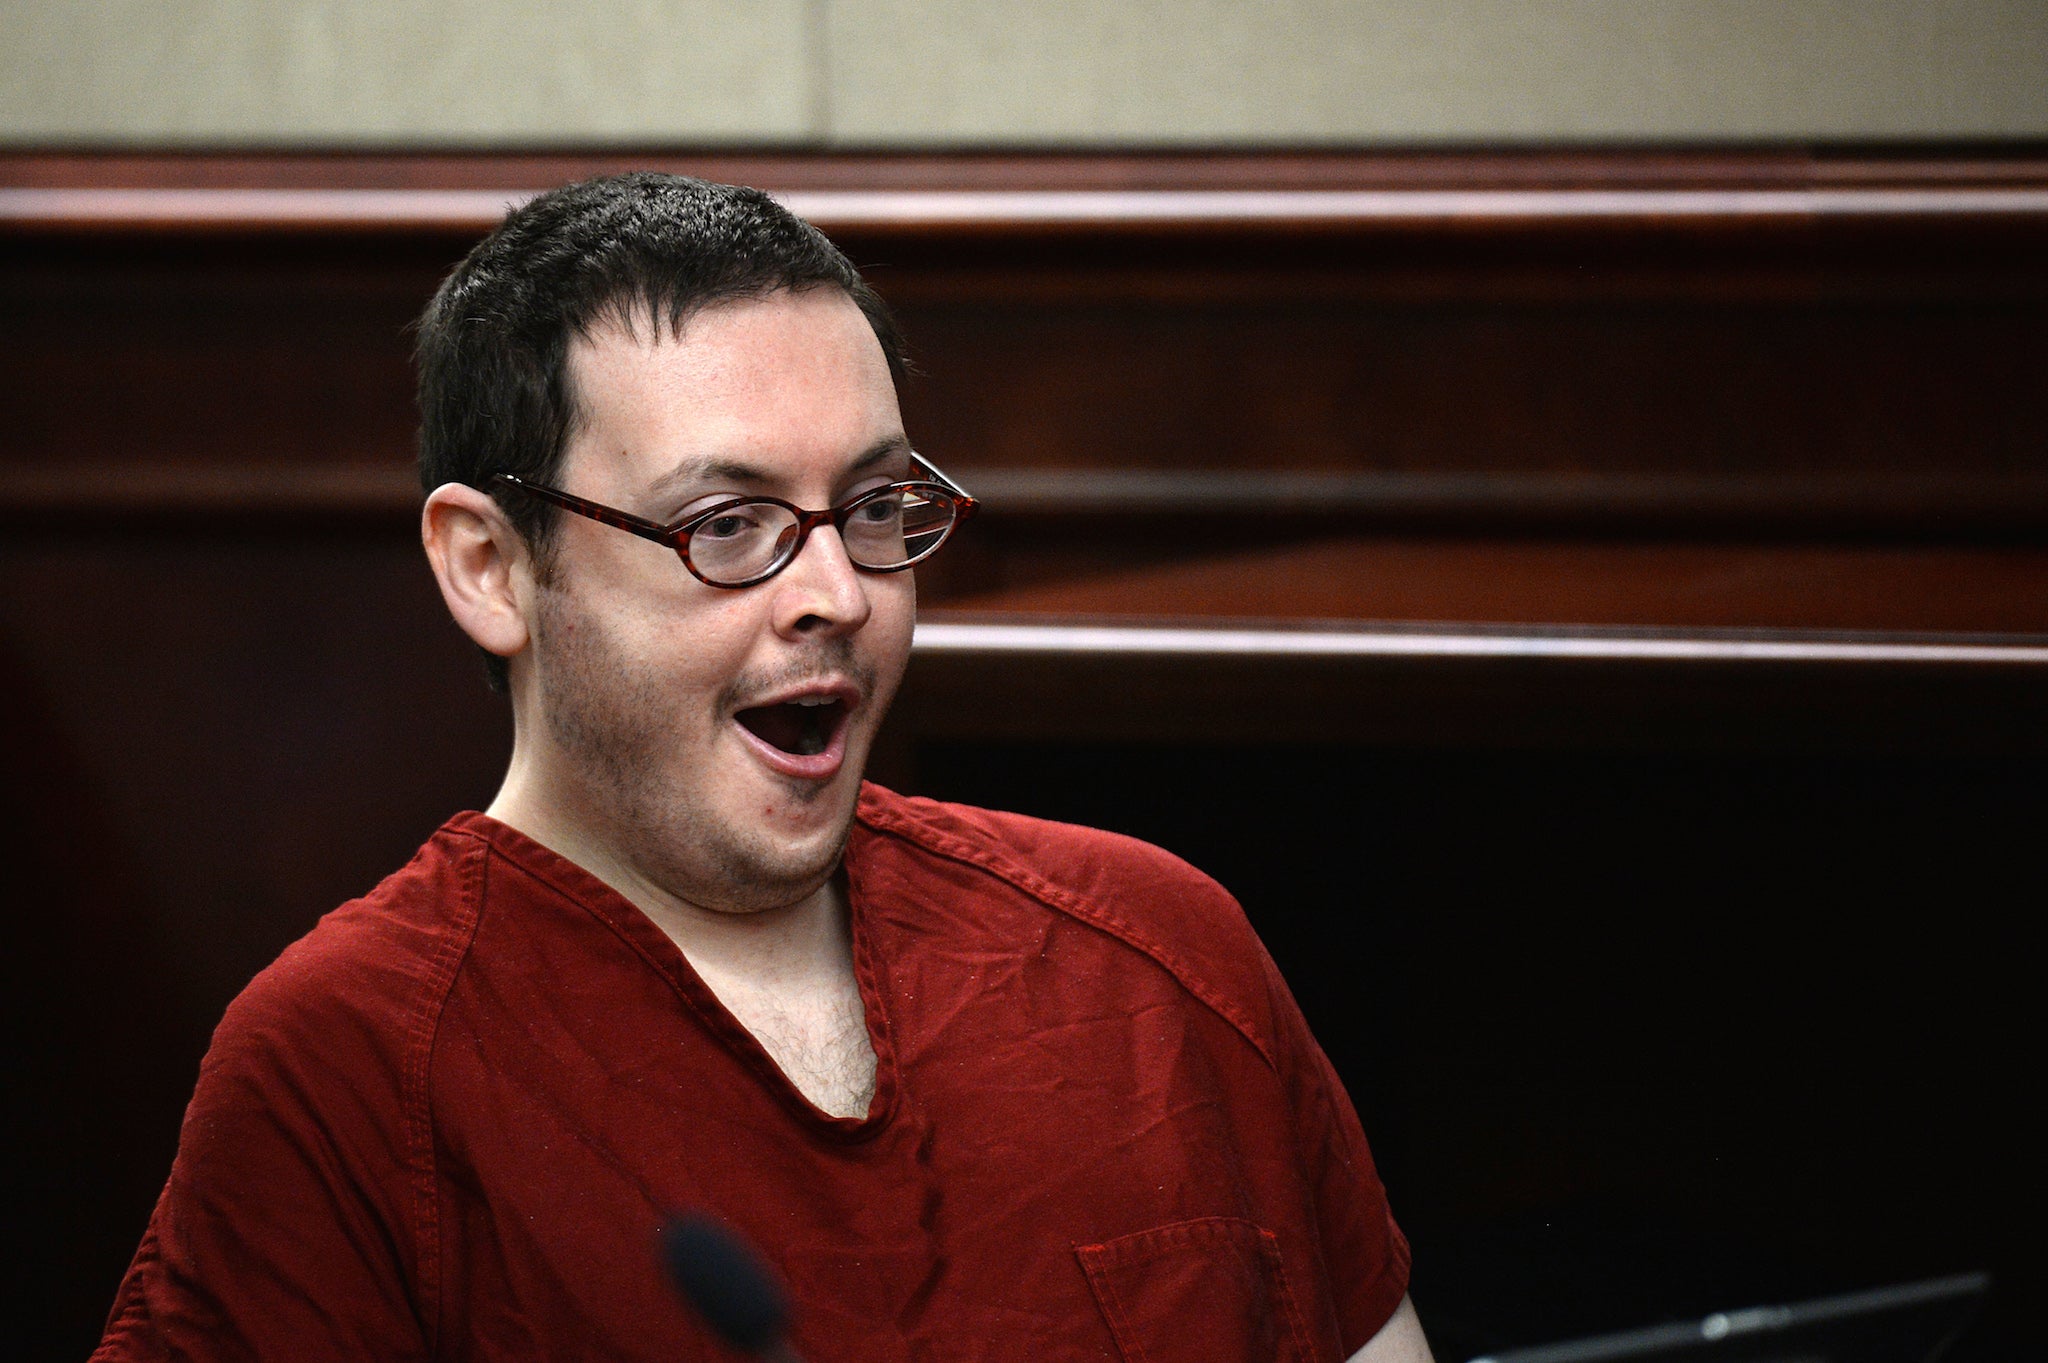 James Holmes yawns during his formal sentencing on Monday. (RJ Sangosti/The Denver Post via AP)